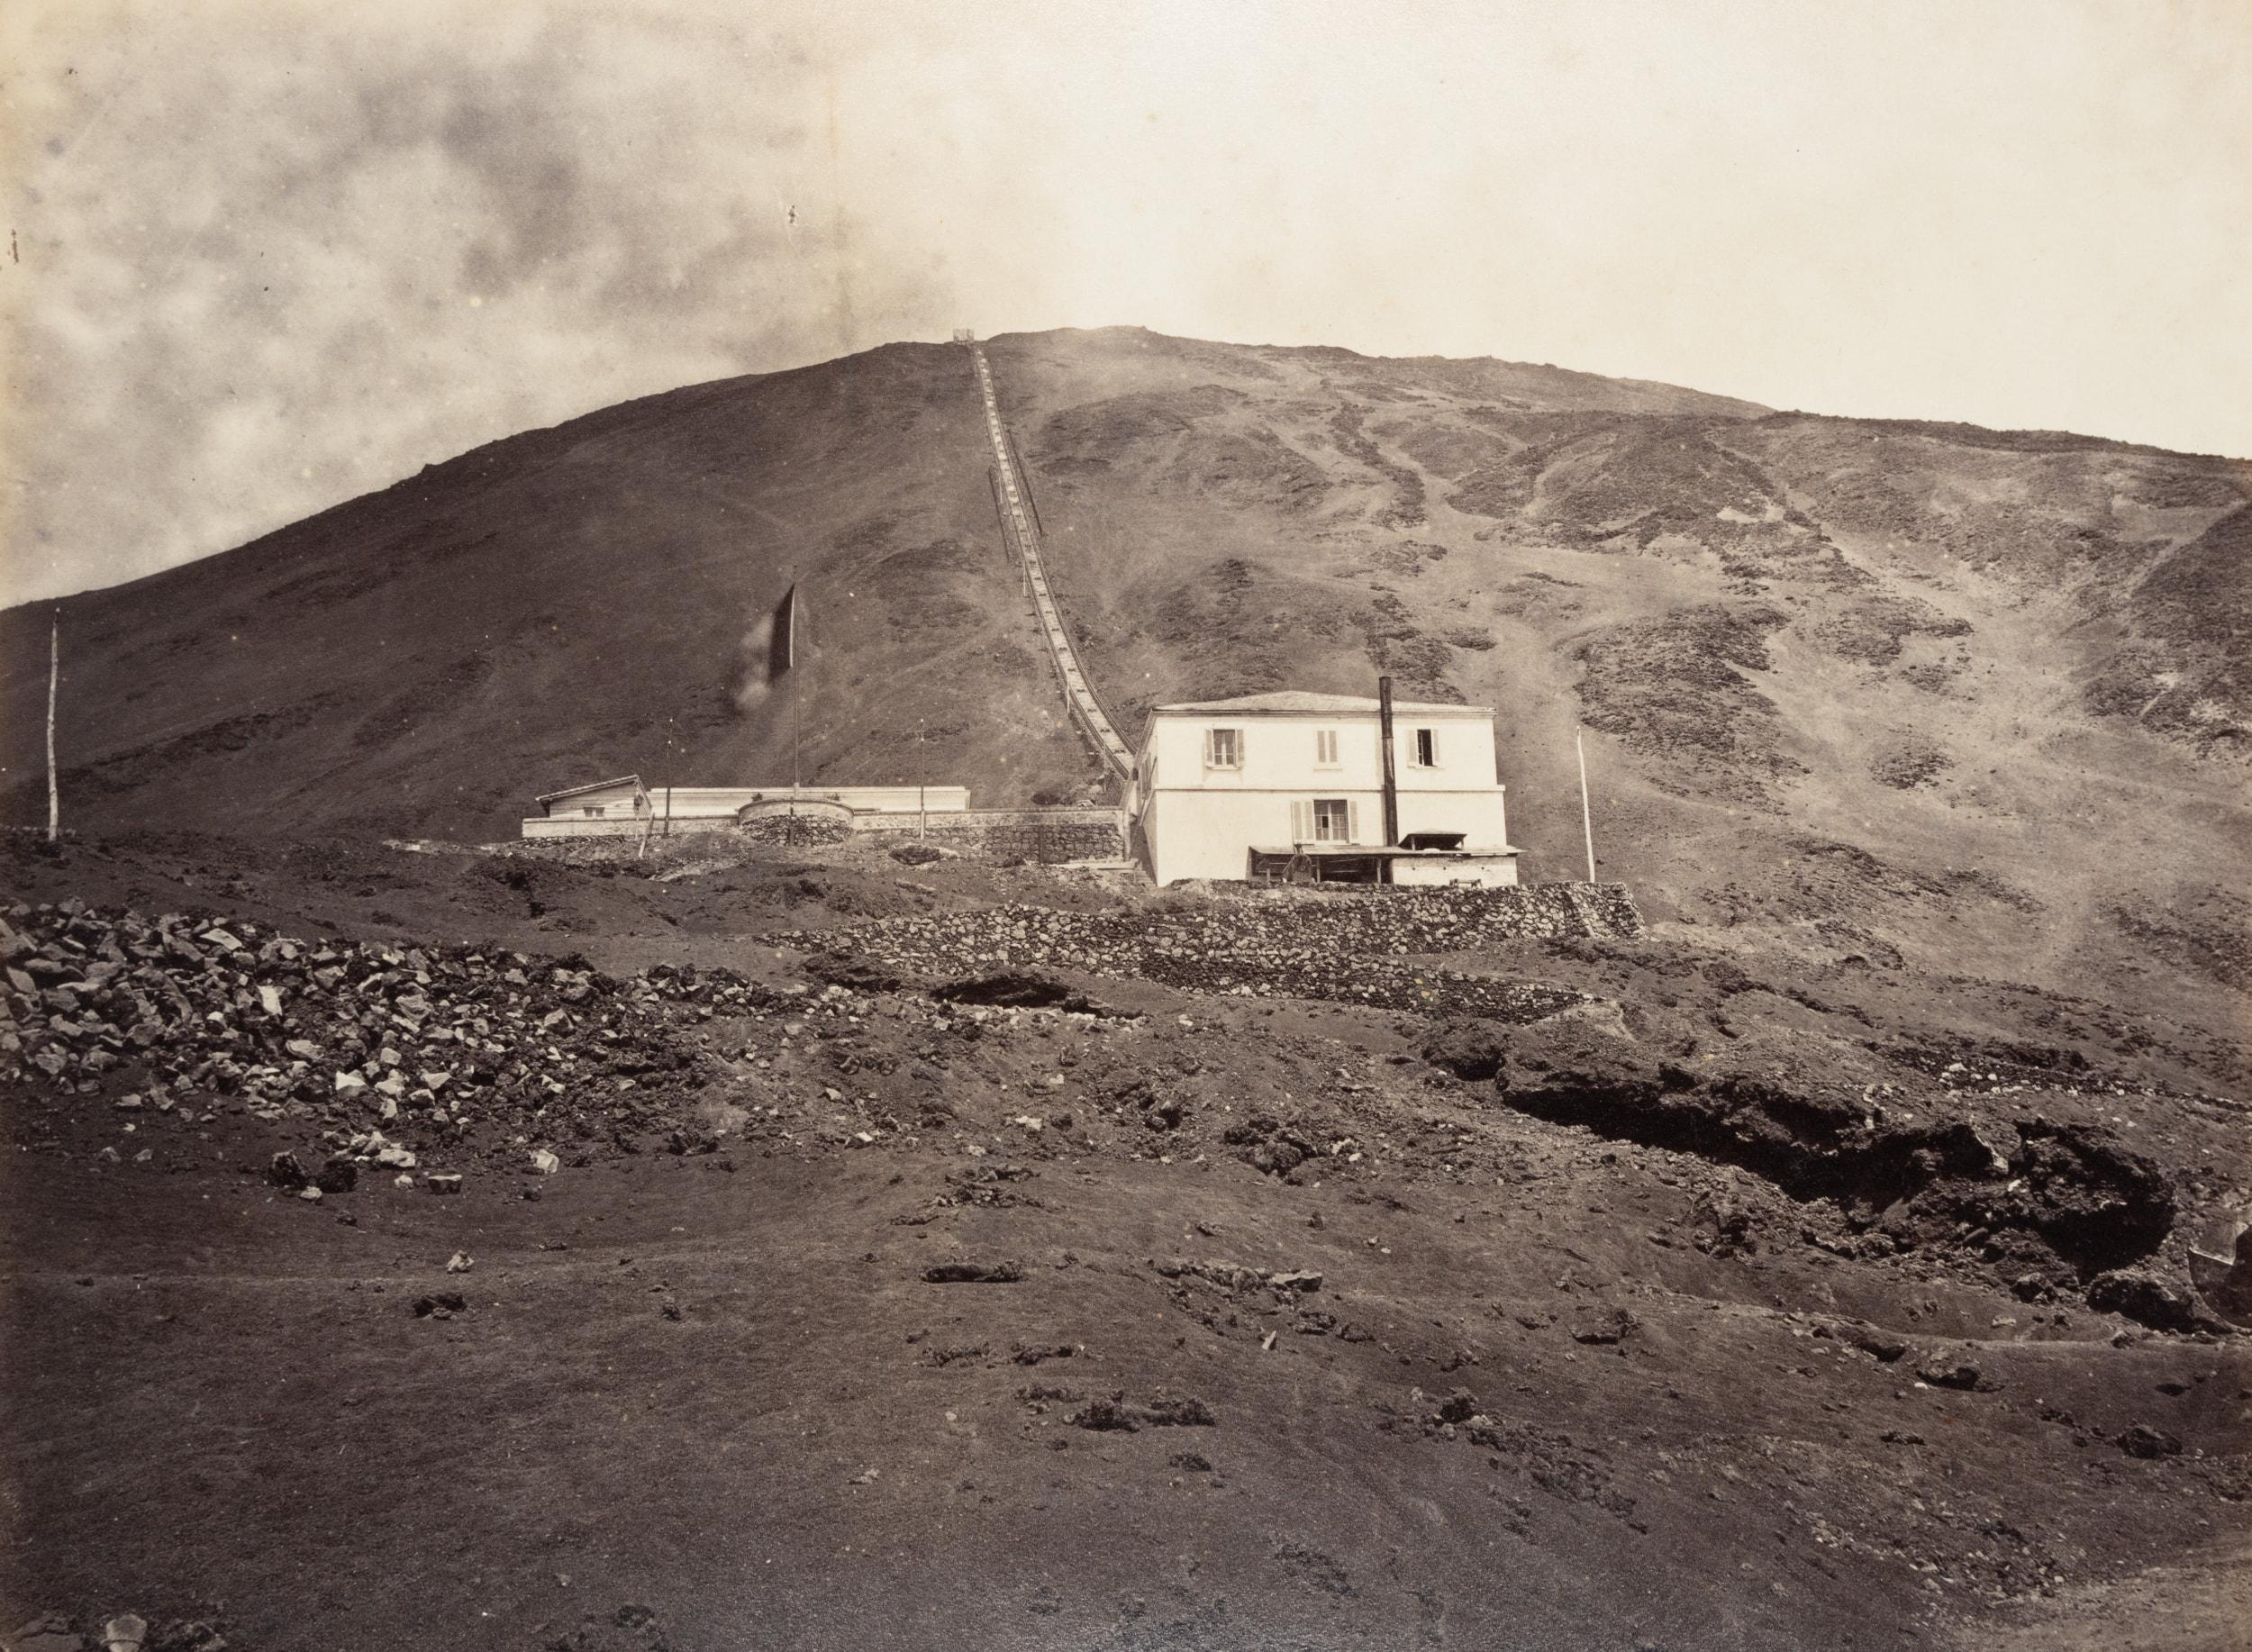 Fratelli Alinari Landscape Photograph - Destroyed cable car on Vesuvius